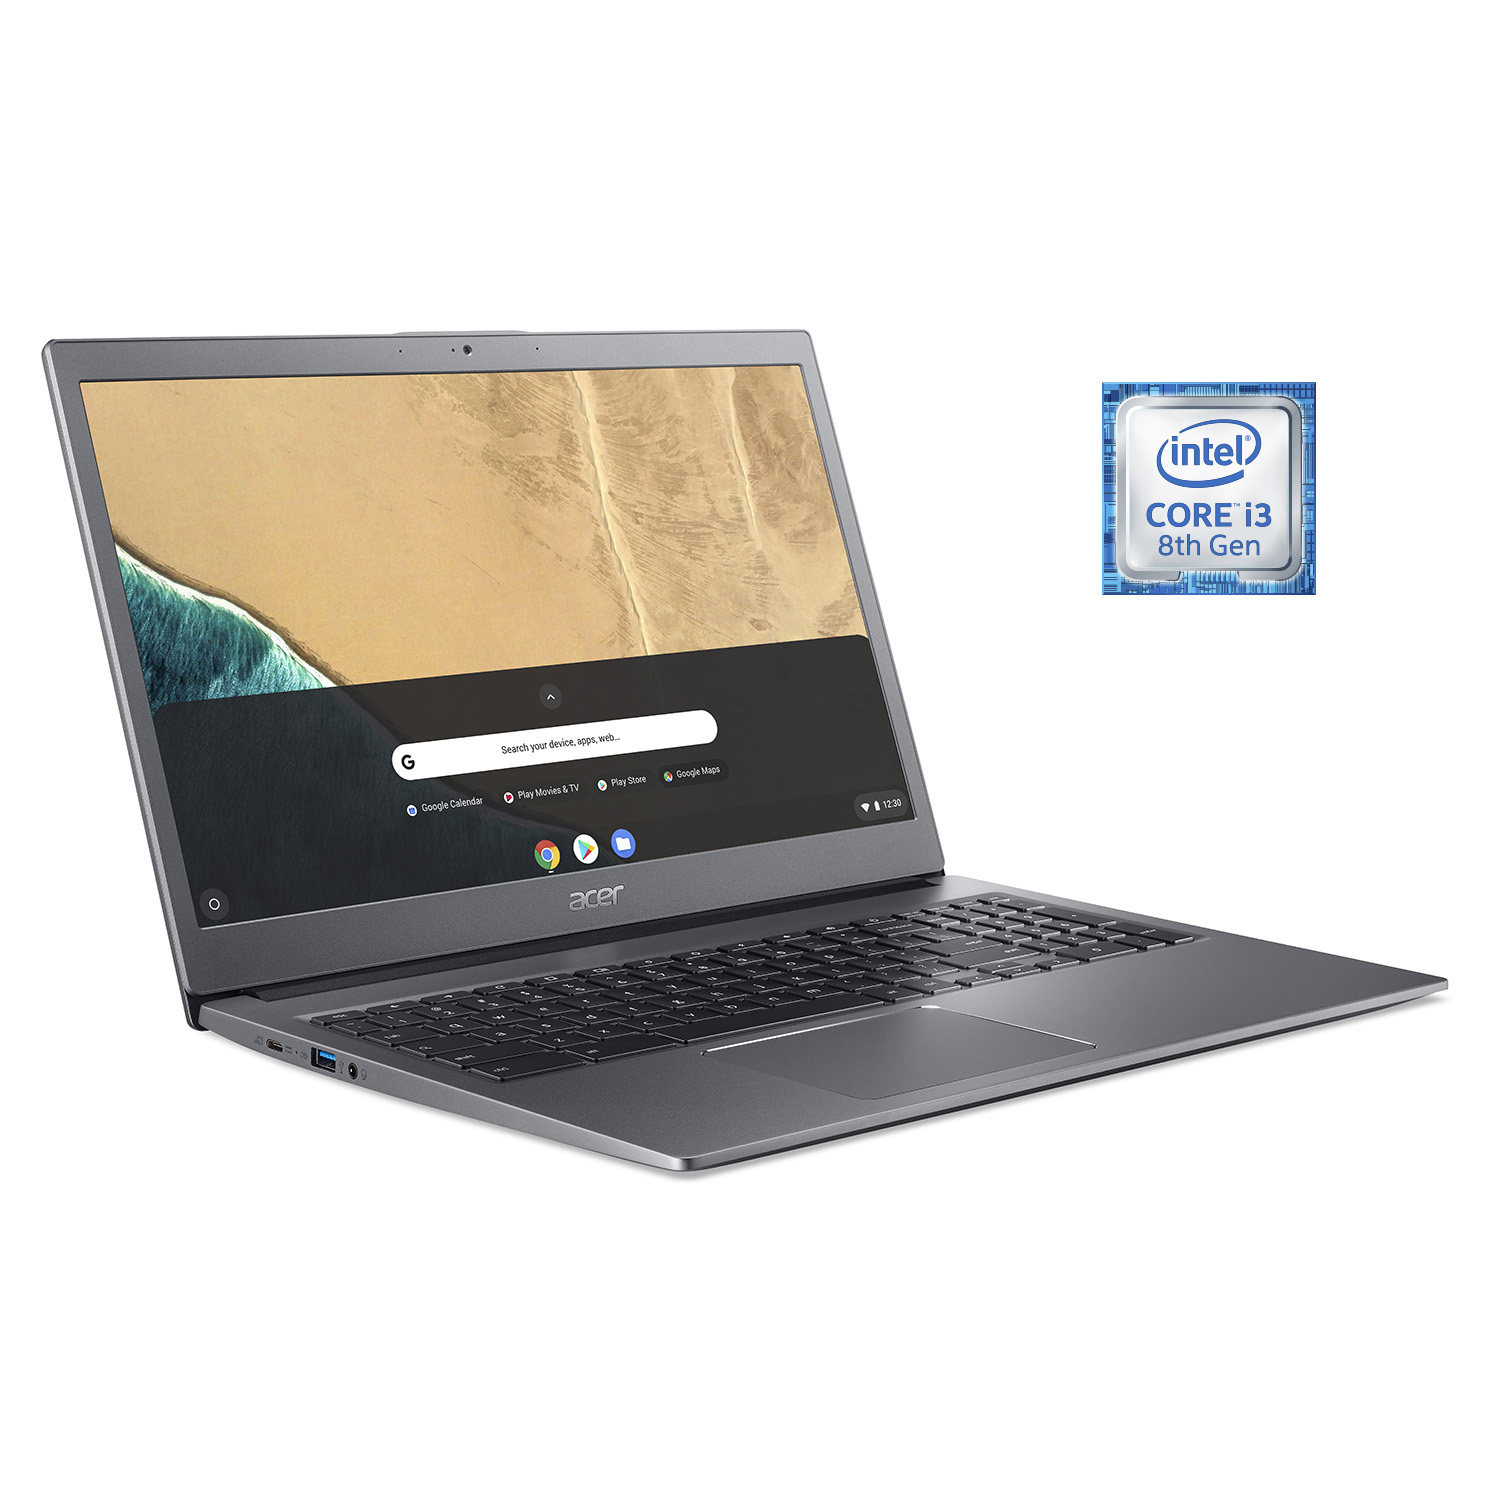 Acer 15.6" FHD Touchscreen Chromebook, Intel Core i3, 4GB RAM, 128GB HD, Chrome OS, Gray, 81JW0001US - image 1 of 6